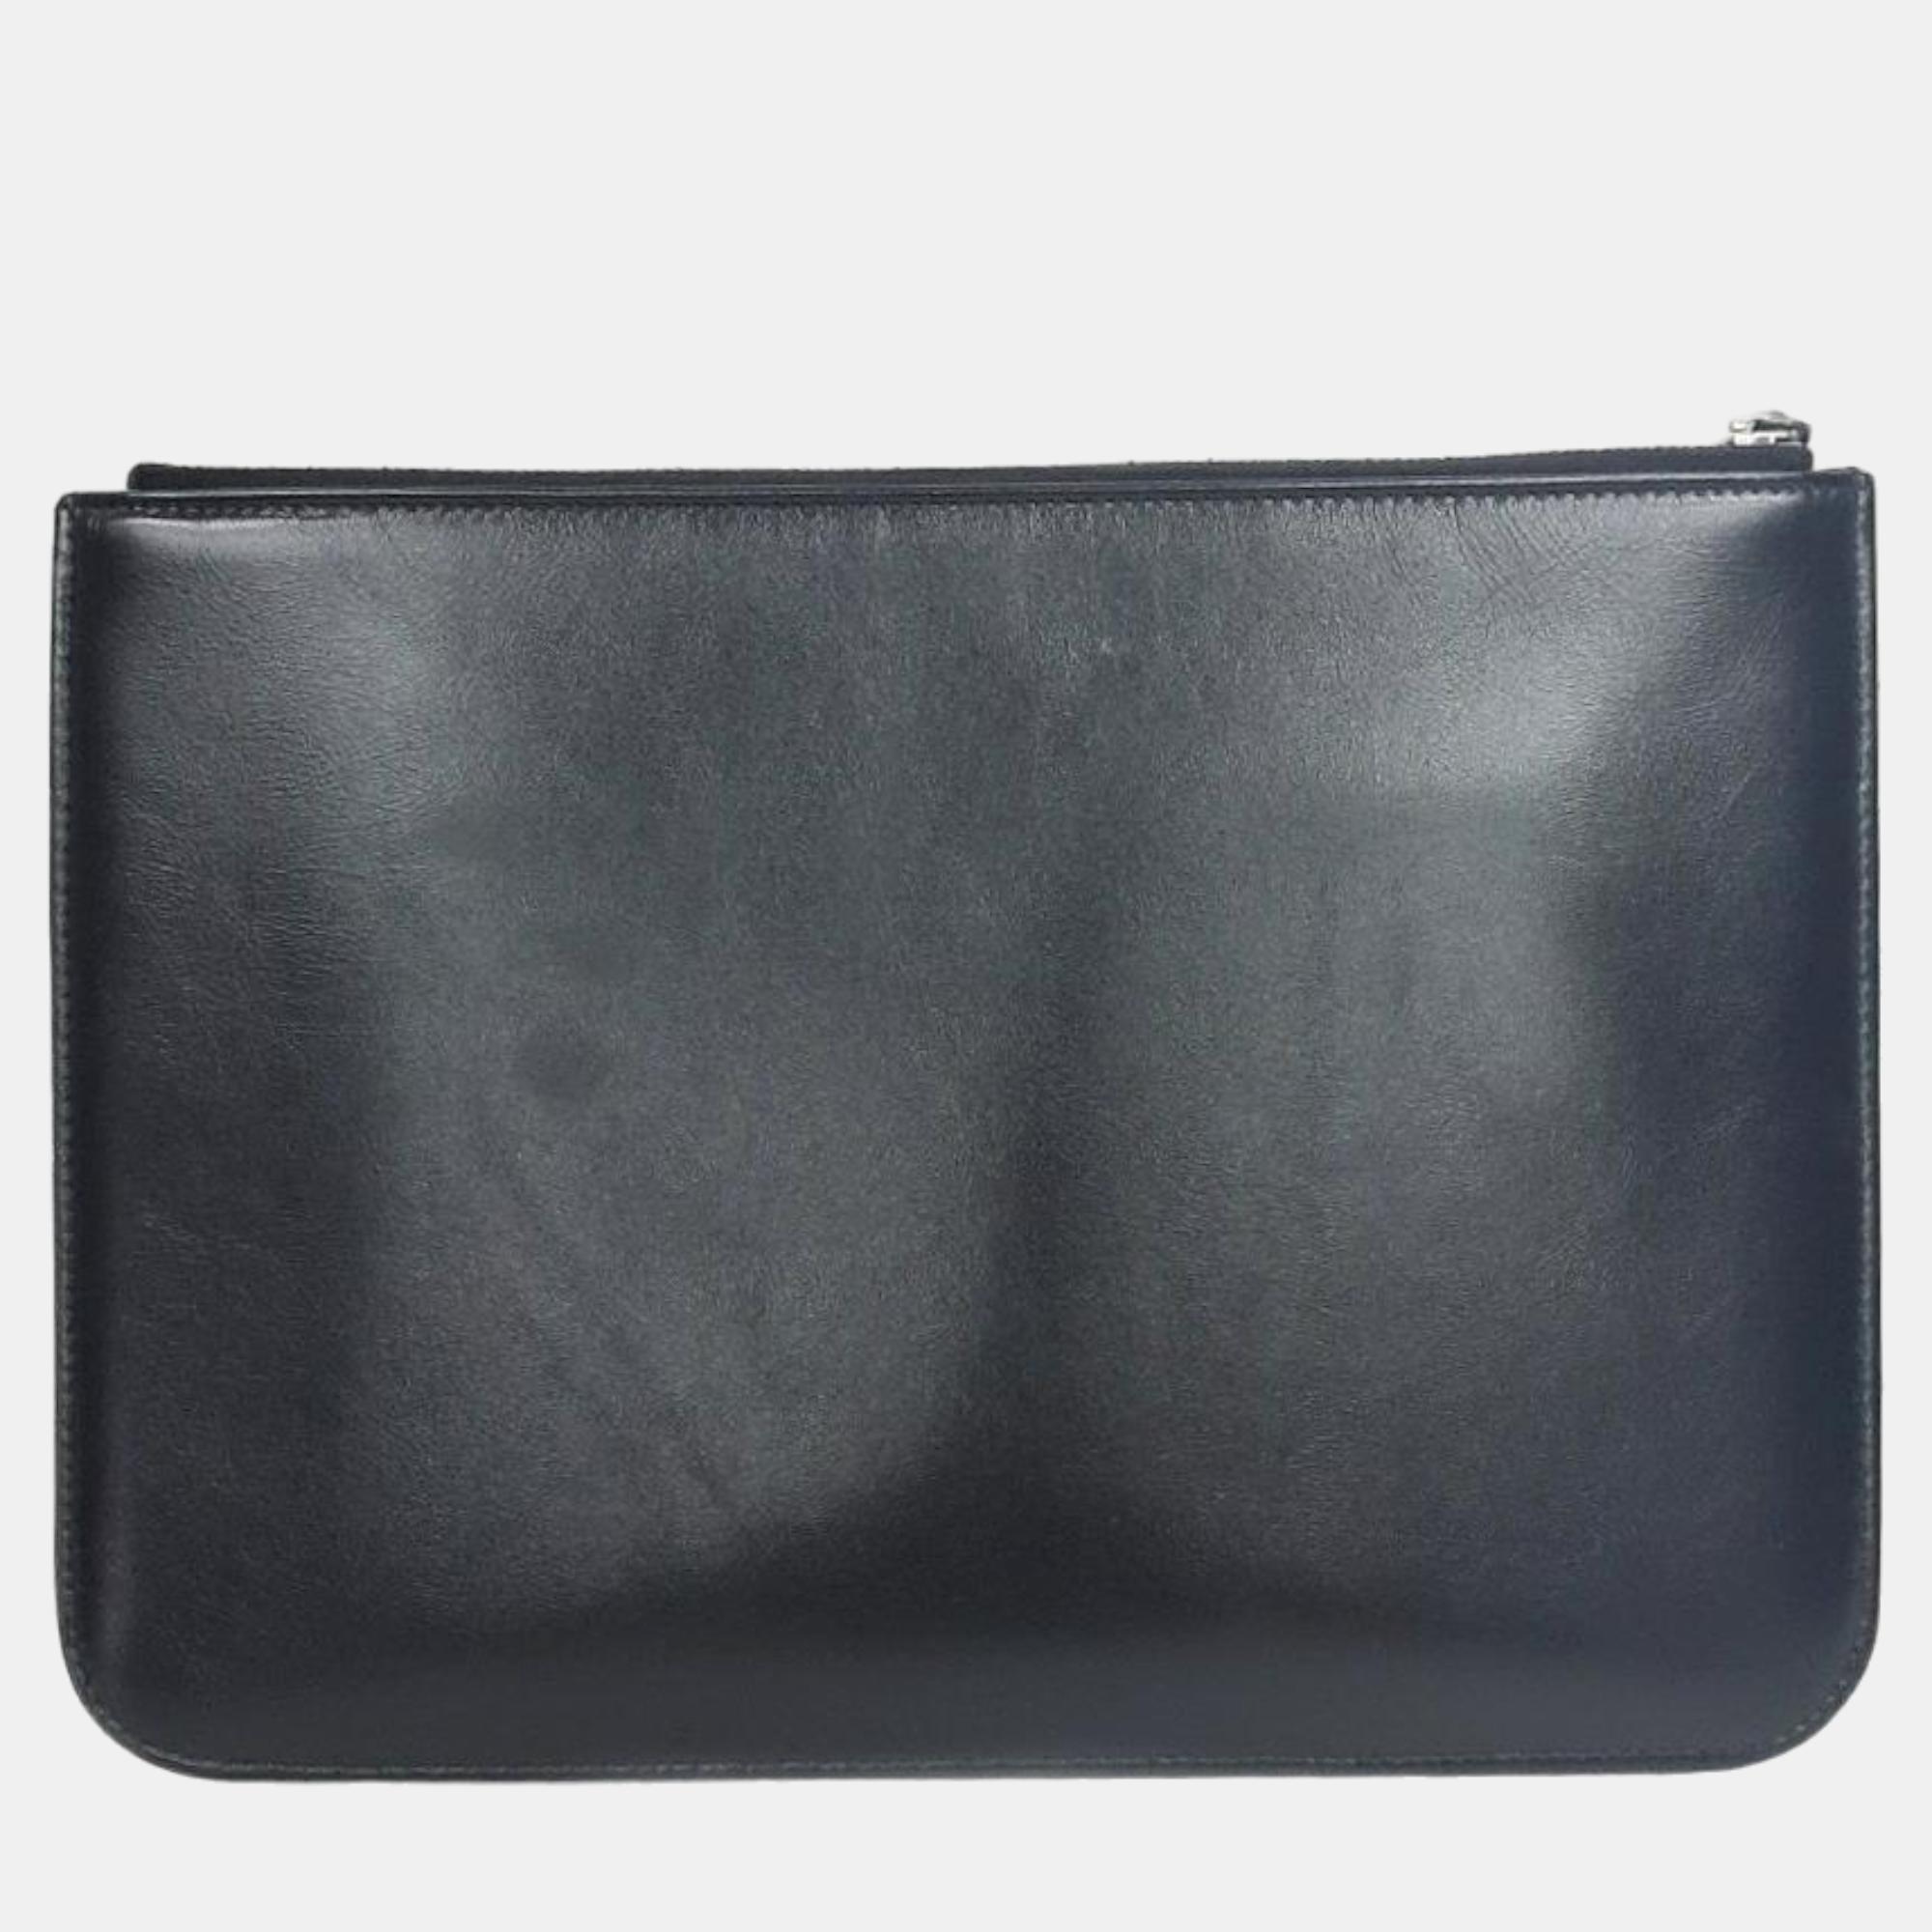 Chanel Black Leather 19 Clutch Bag